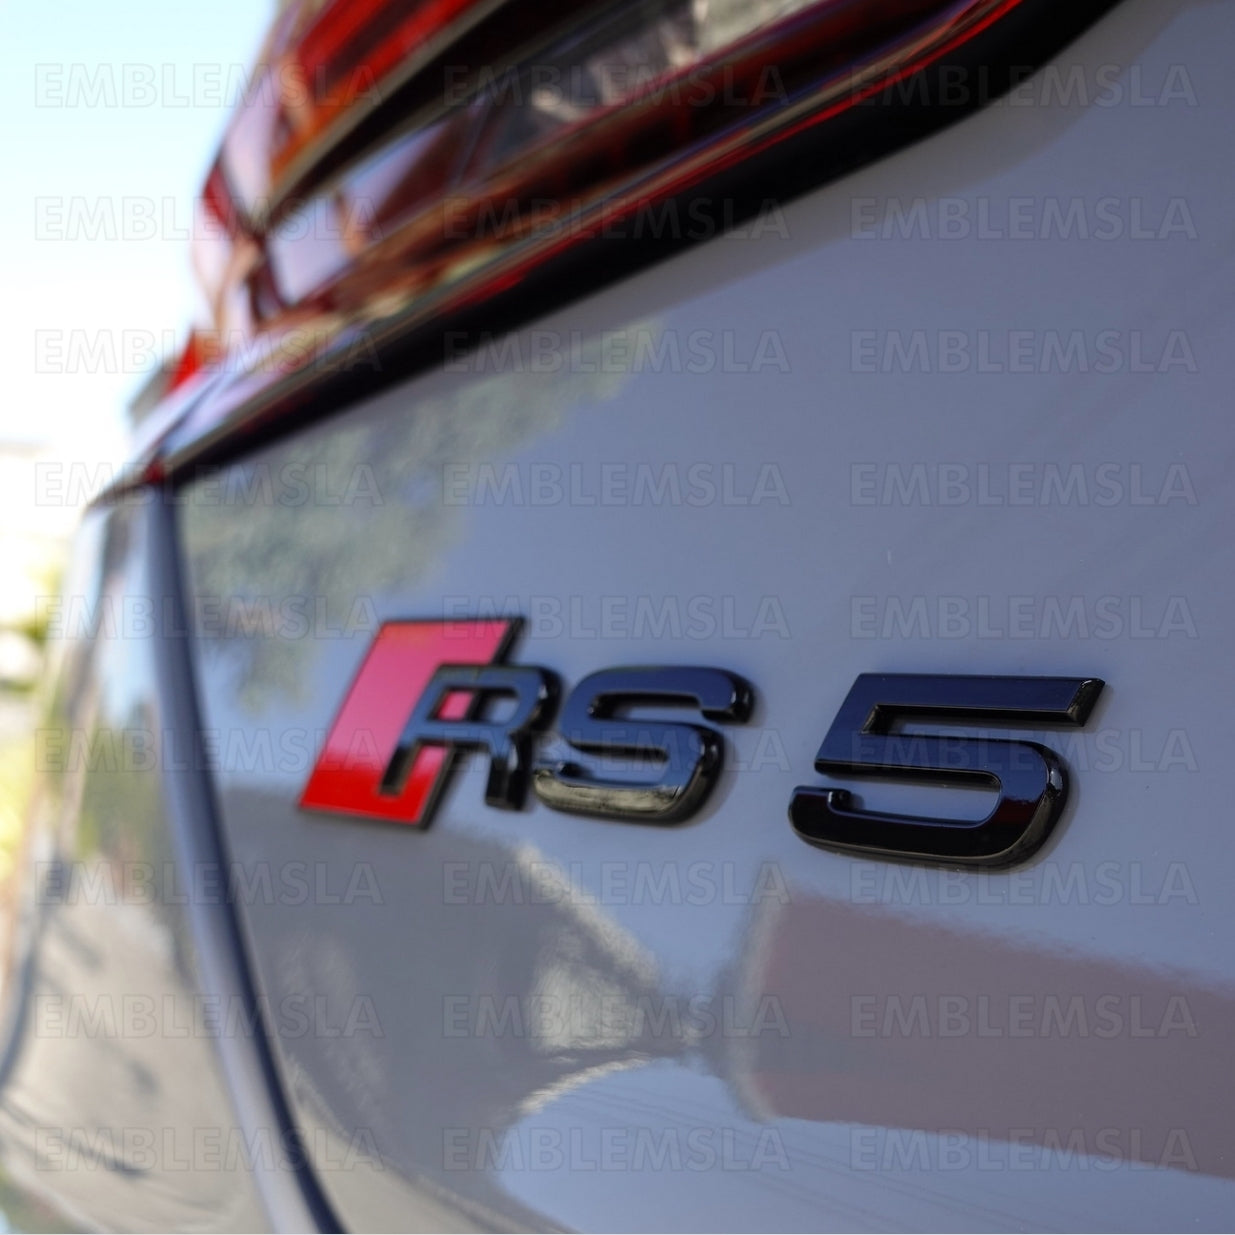 Audi RS5 Gloss Black Emblem 3D Badge Rear Trunk Tailgate for Audi RS5 S5 Logo A5